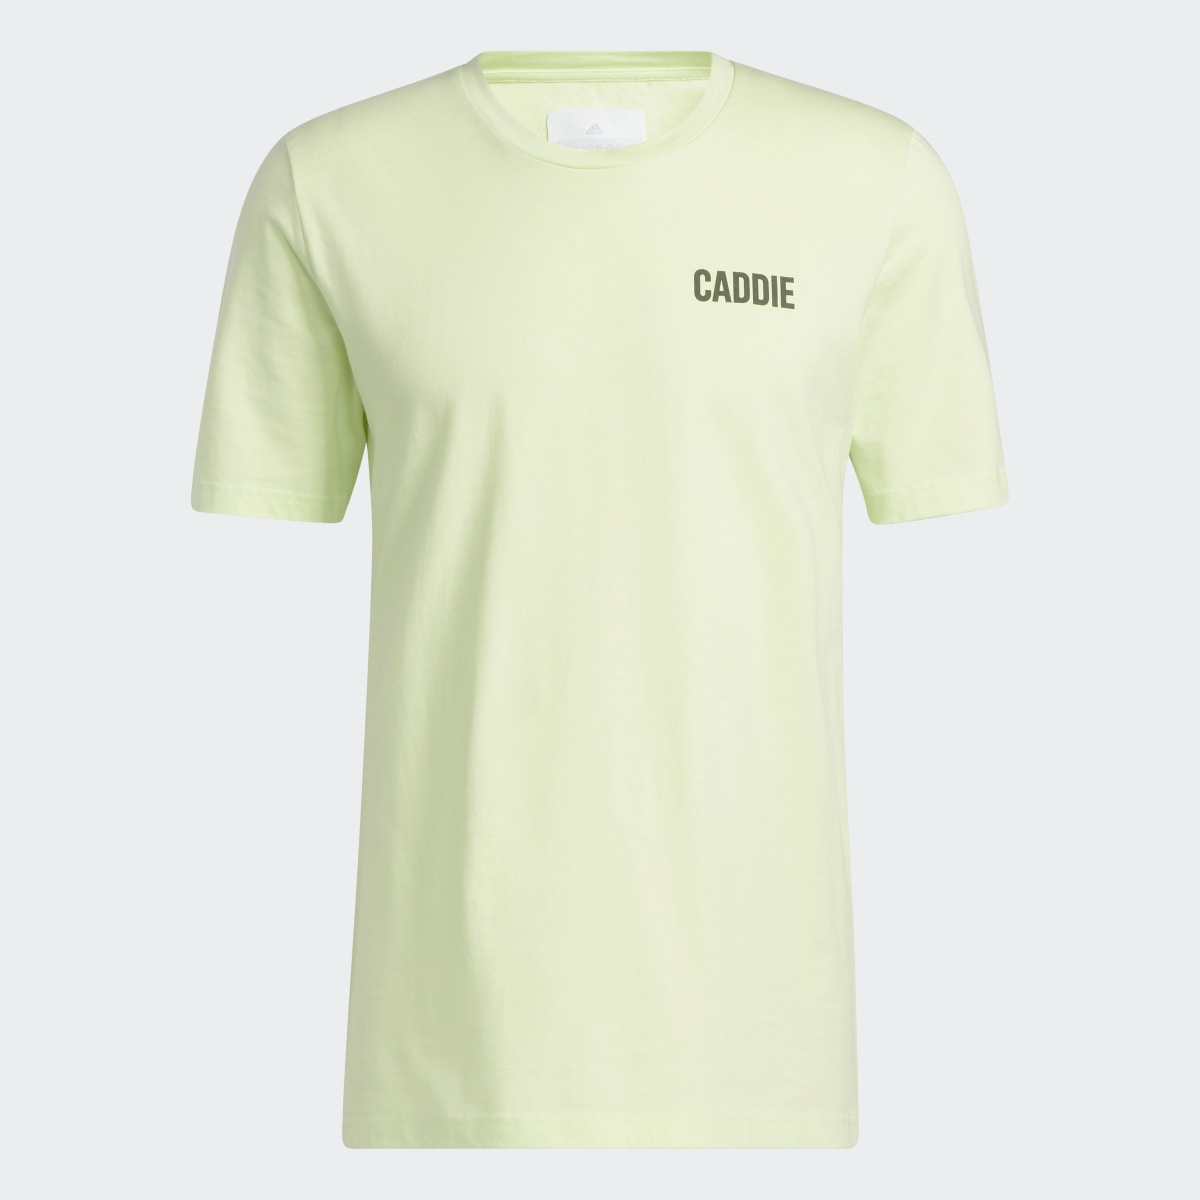 Adidas Adicross Caddie Golf T-Shirt. 5